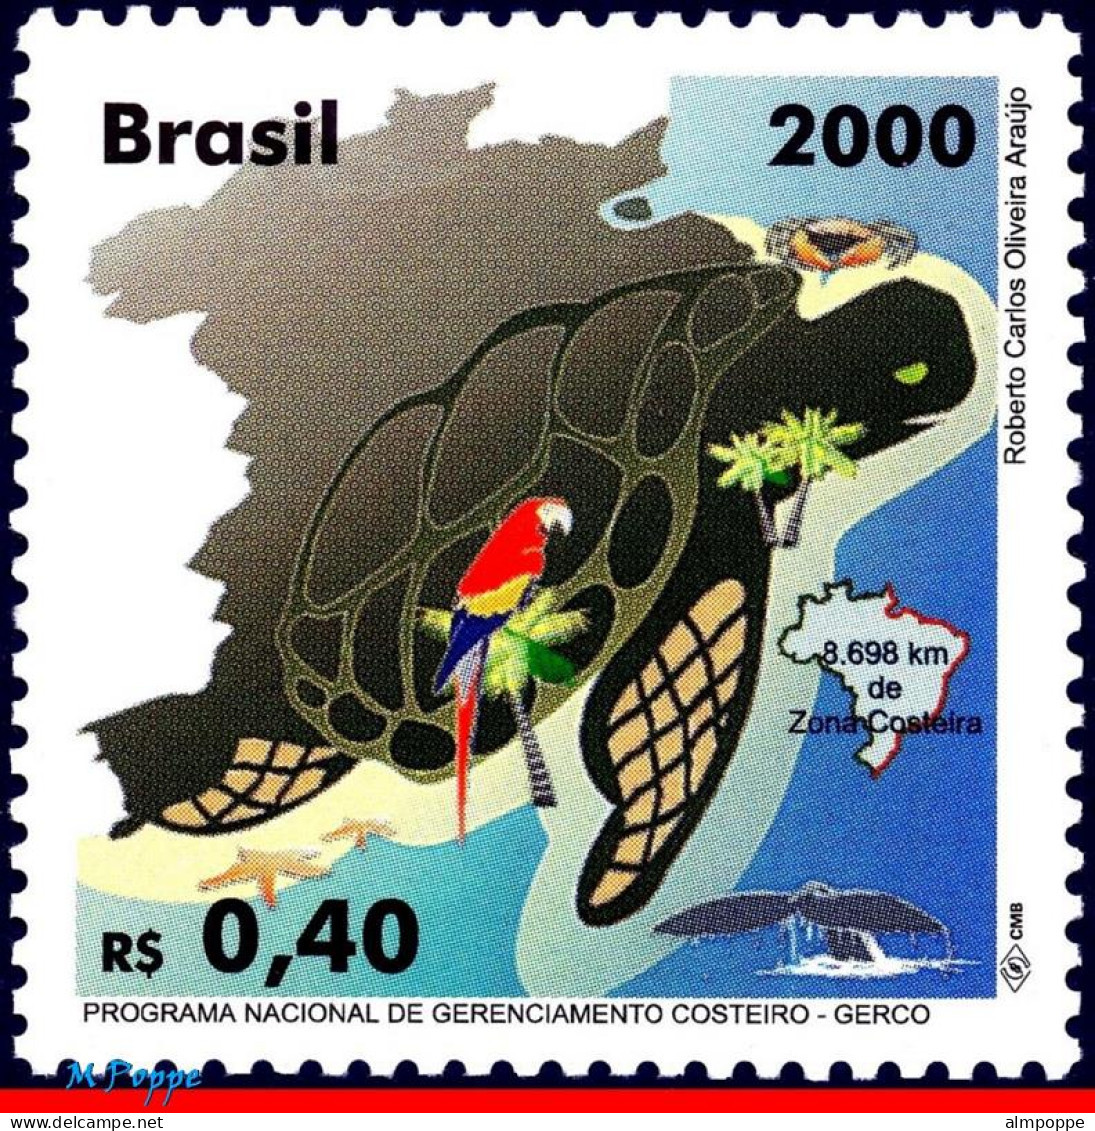 Ref. BR-2742 BRAZIL 2000 - GERCO, COASTAL ZONE,PARROT, TURTLE, WHALE, MI# 3028, MNH, MAPS 1V Sc# 2742 - Nuevos